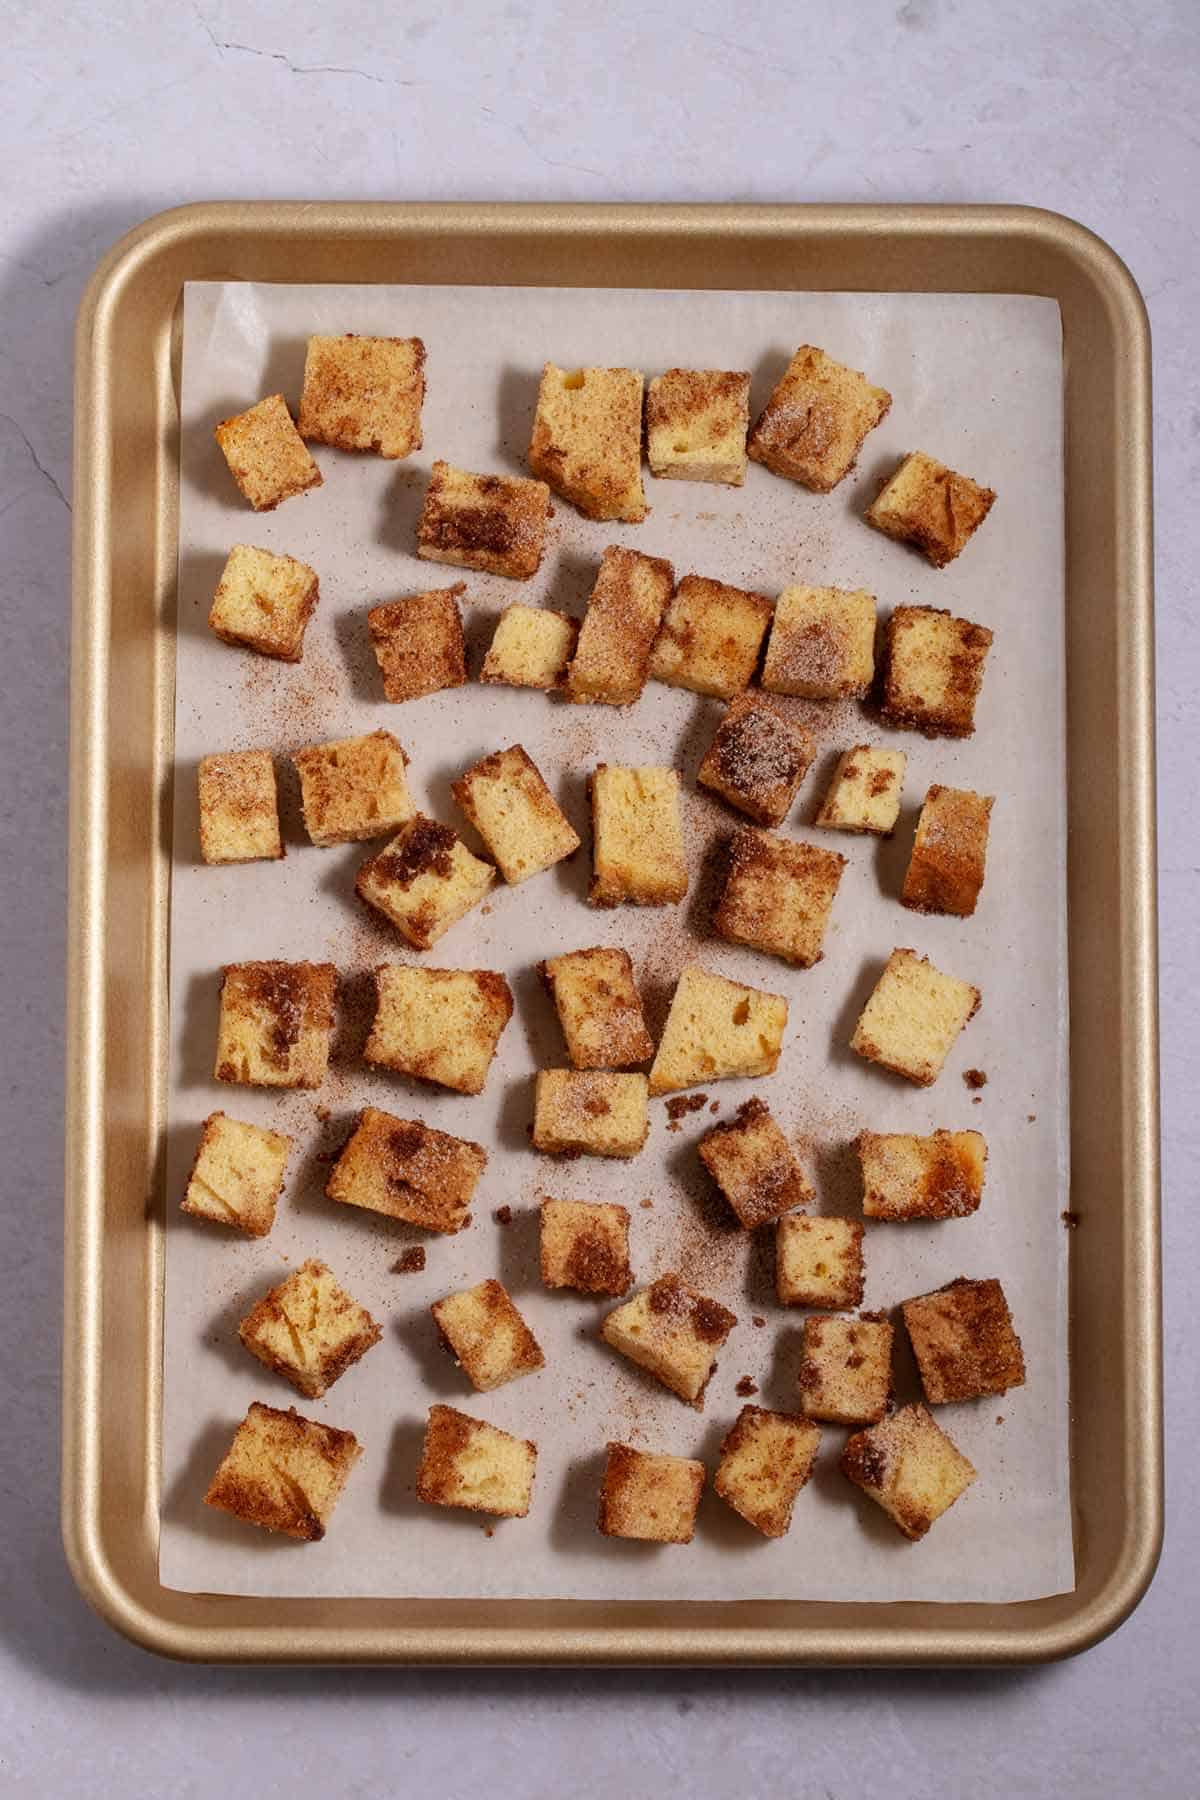 Cinnamon sugar pound cake croutons on a baking sheet.